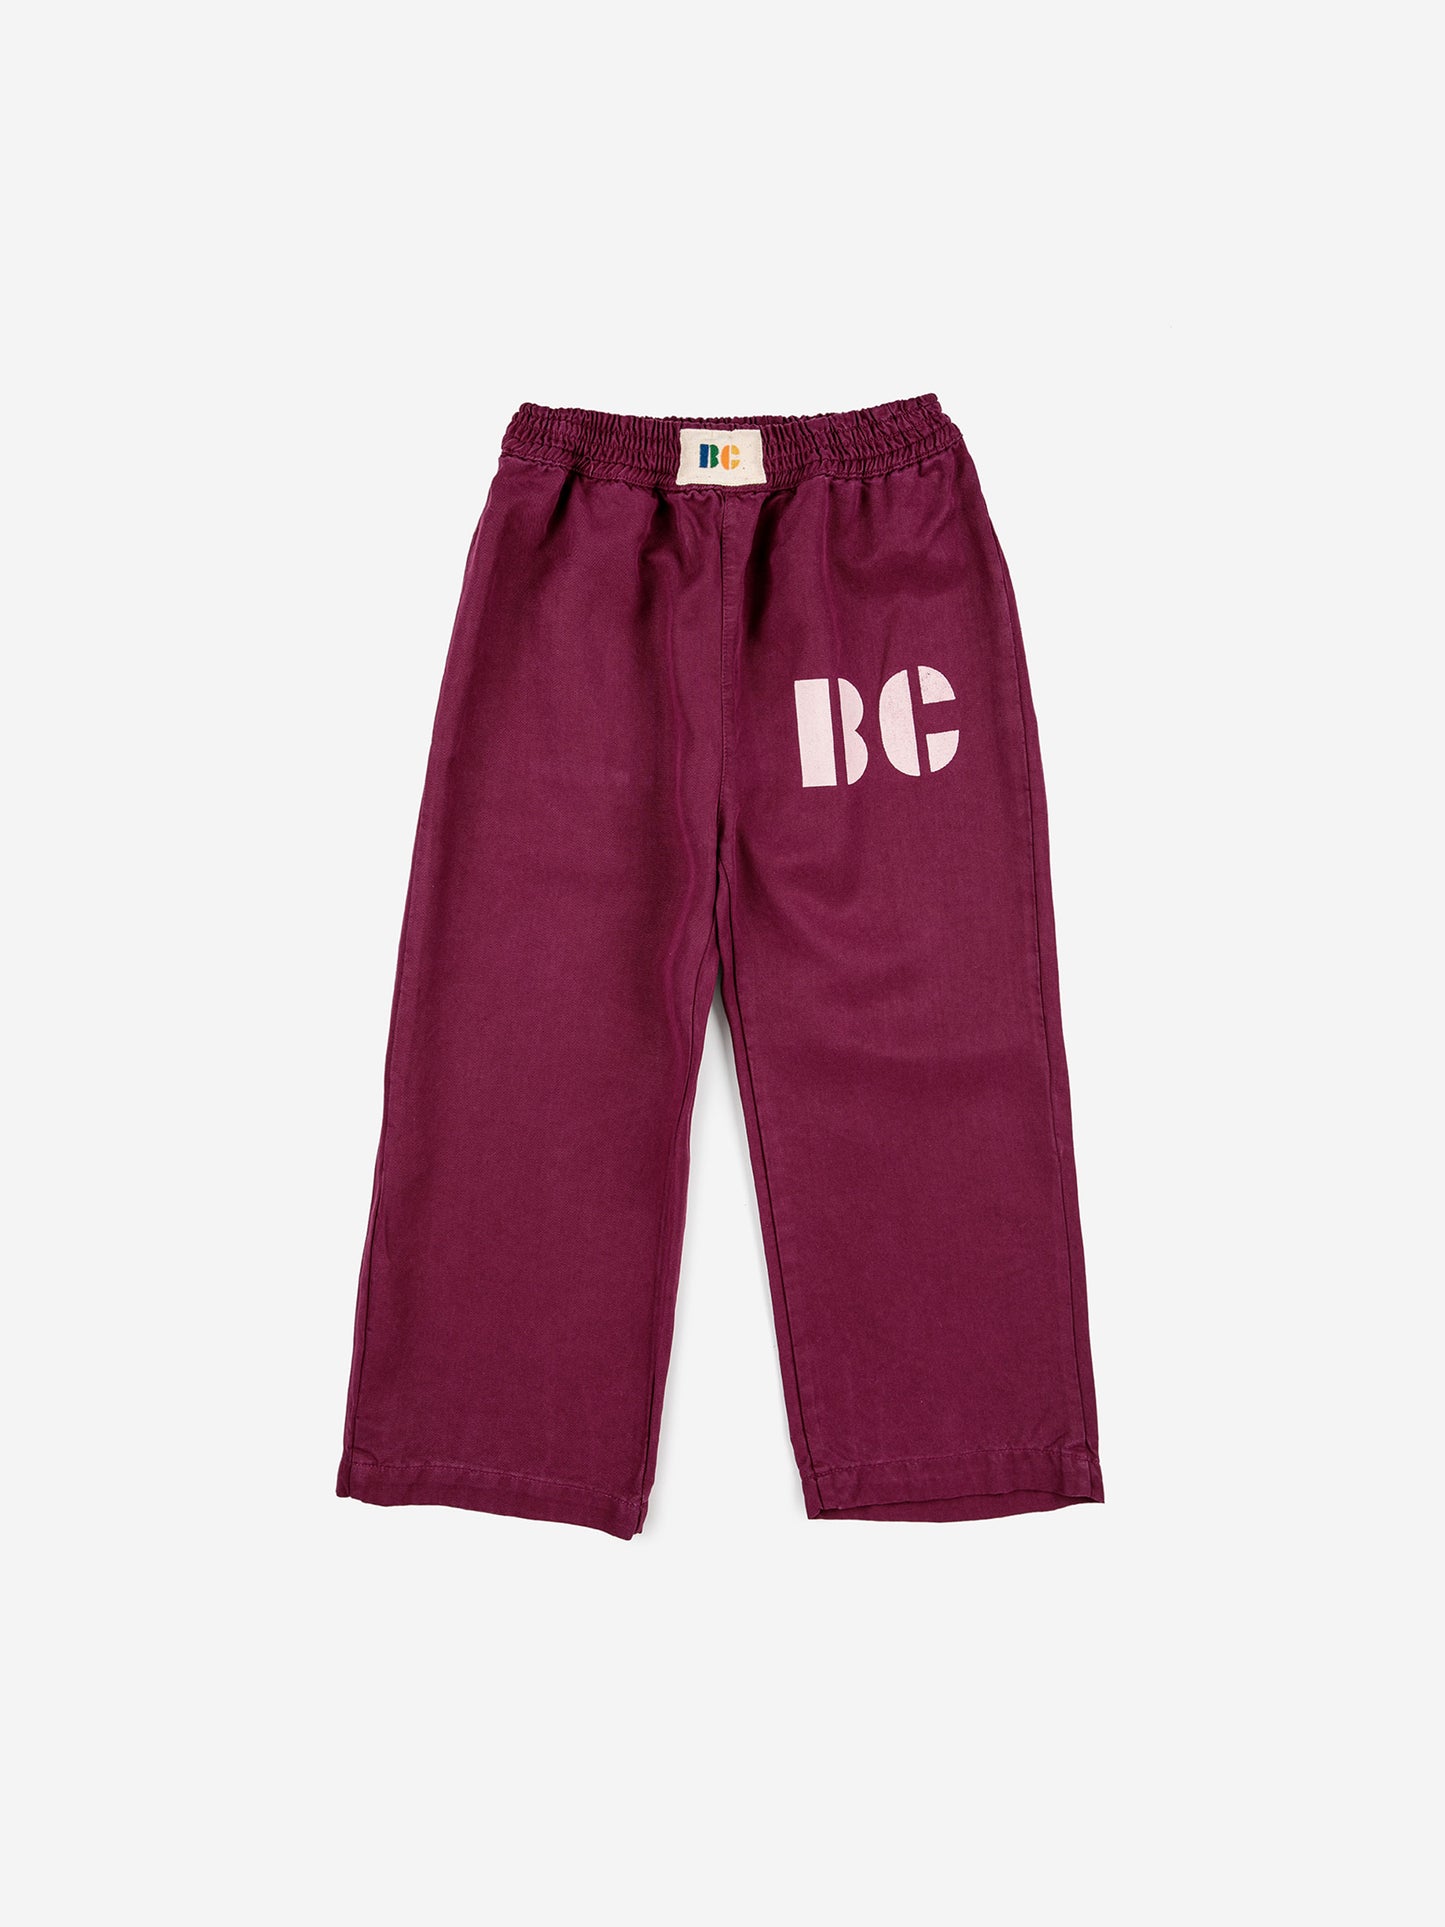 B.C straight pants